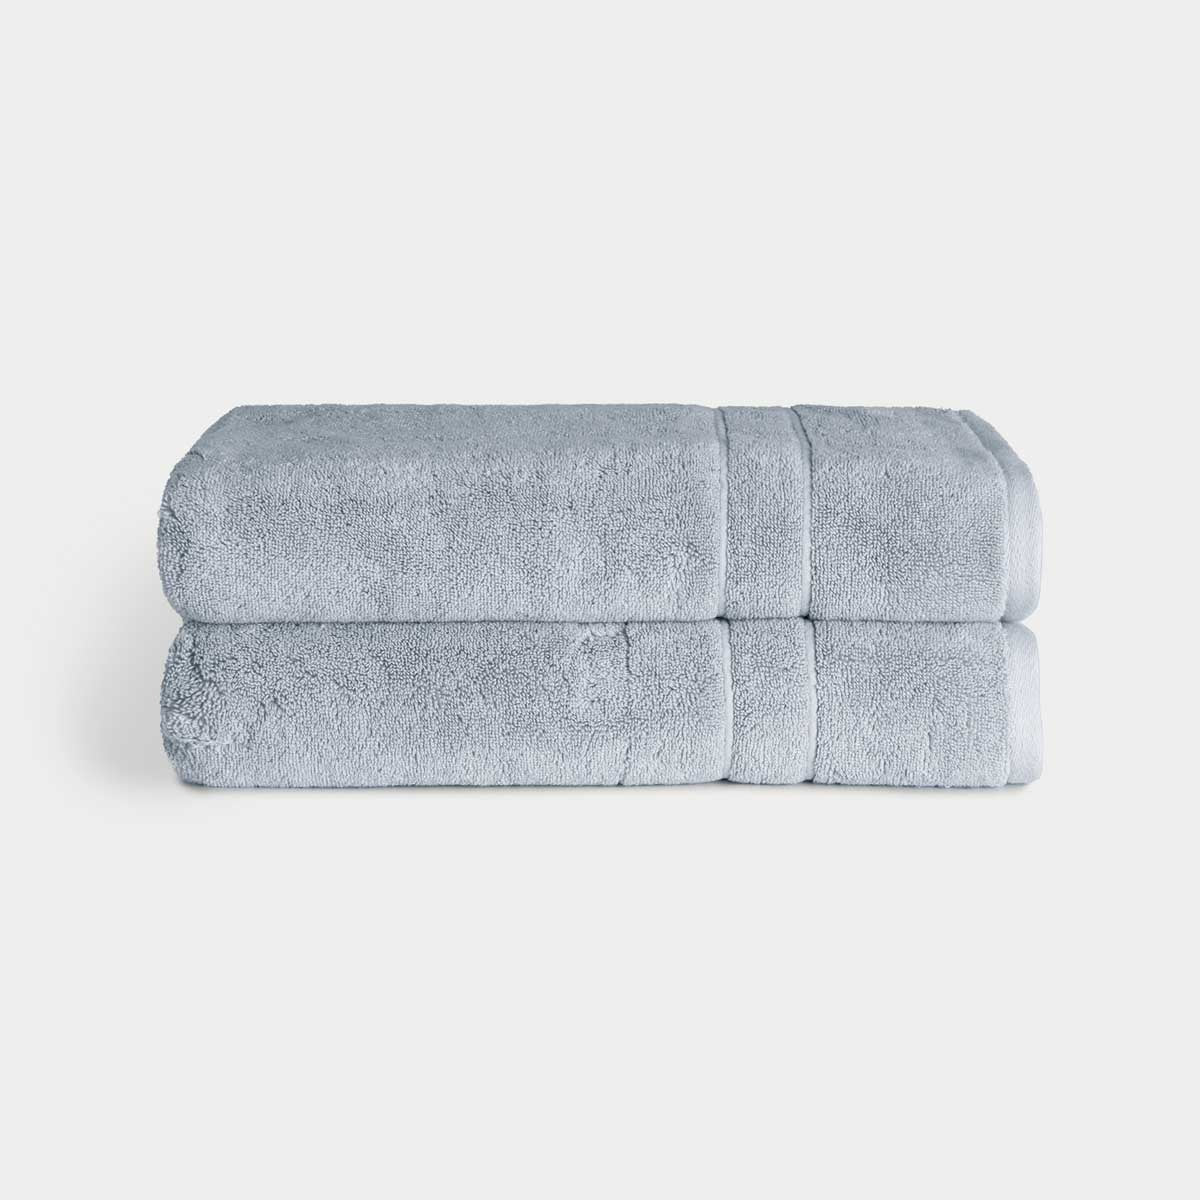 Premium Plush Bath Towels in the color Harbor Mist. Photo of bath towels taken with white background |Color:Harbor Mist